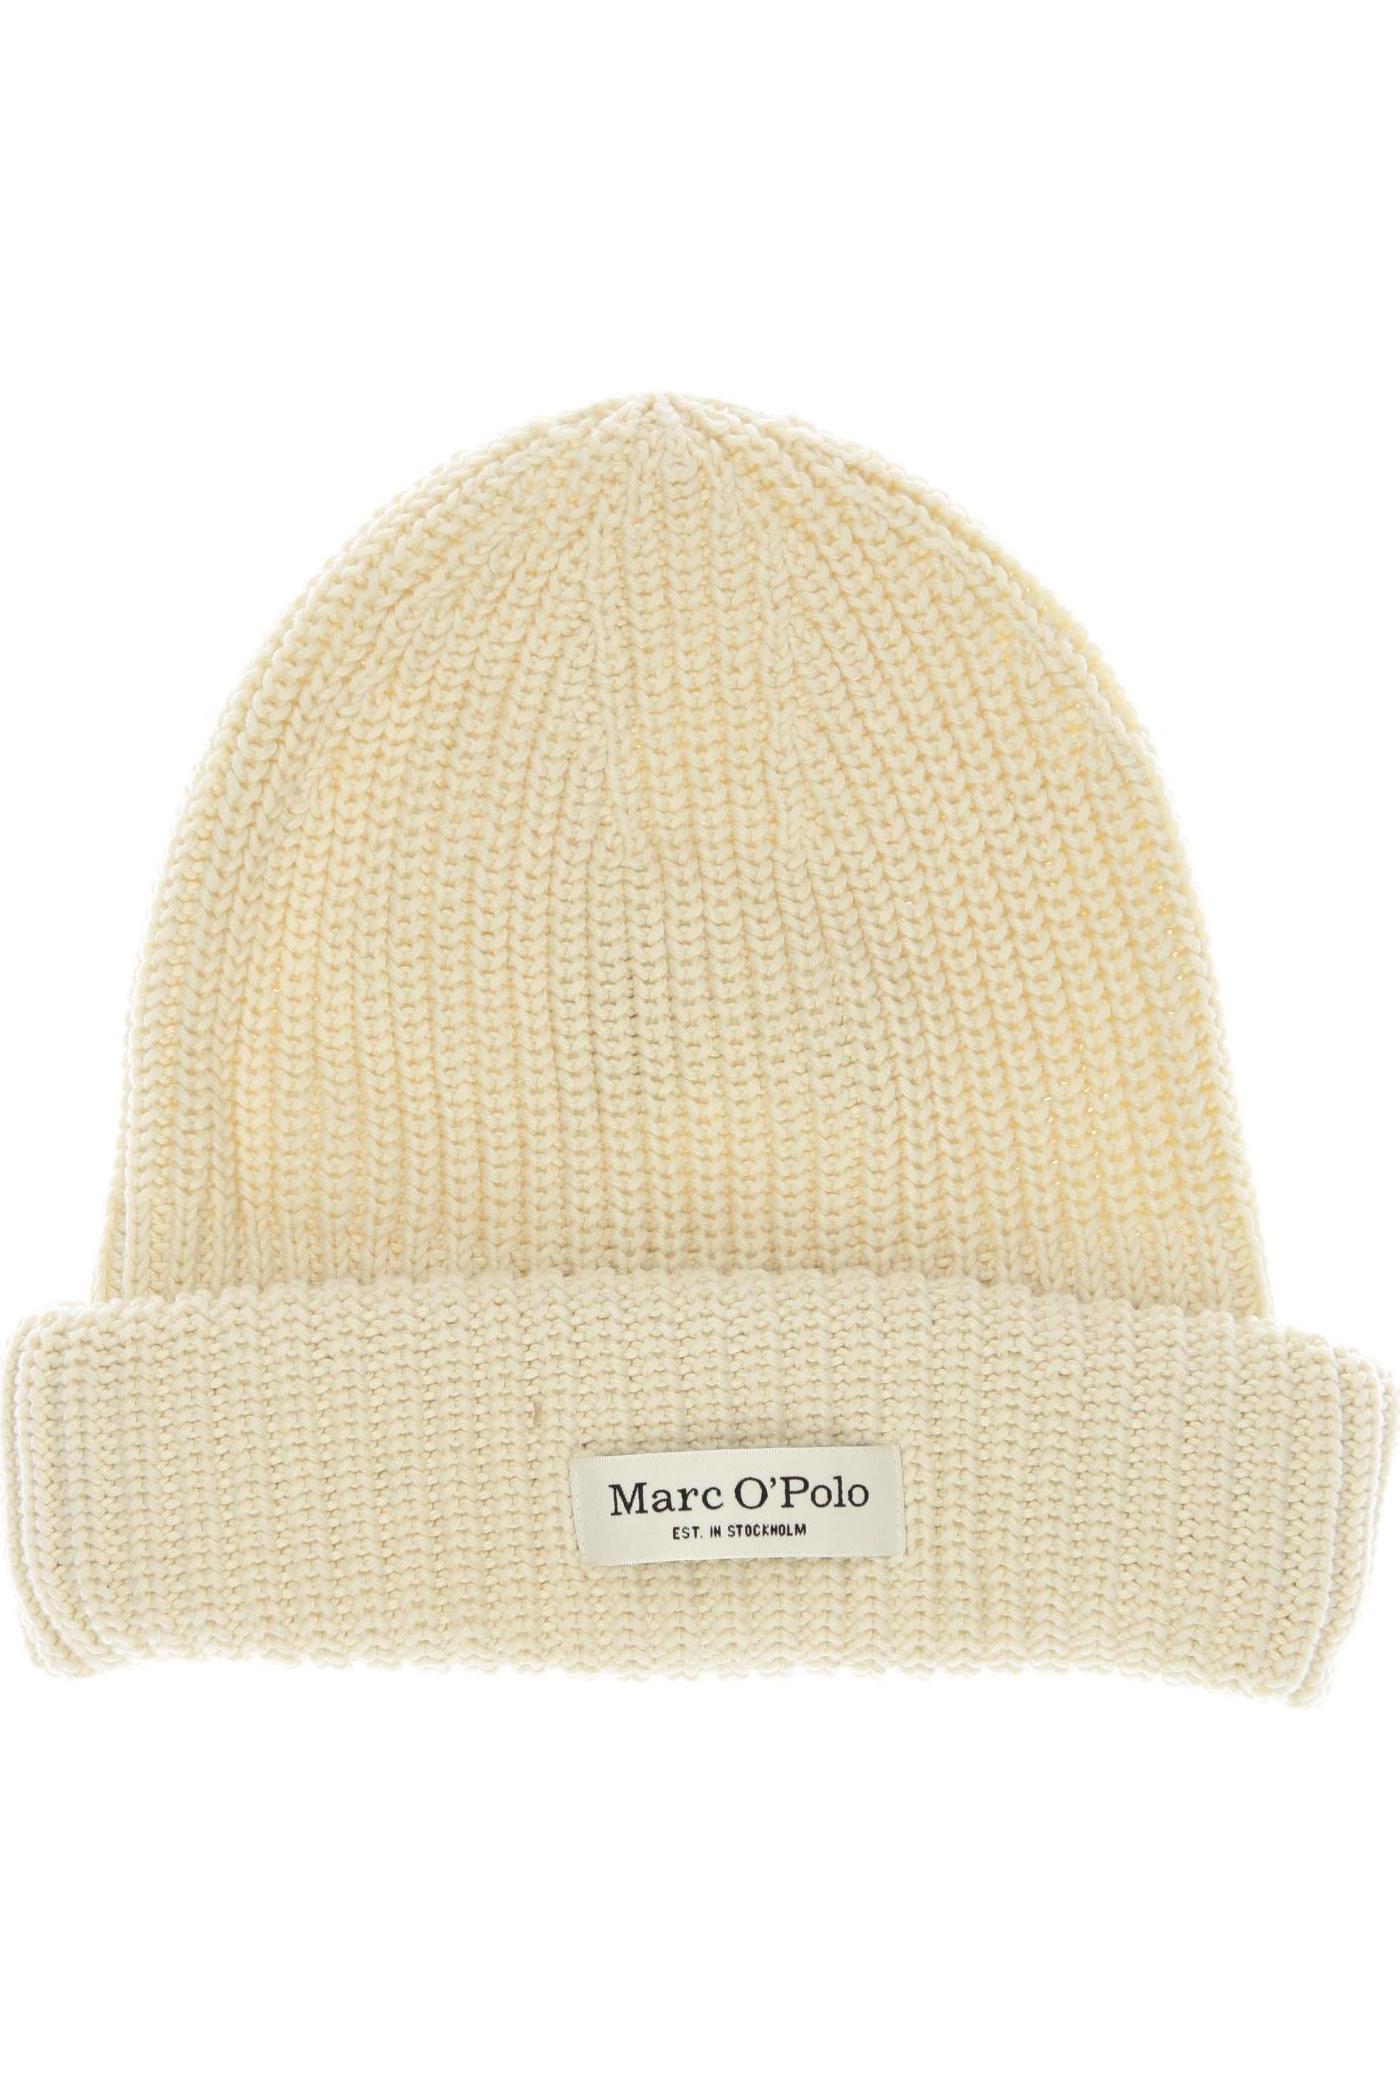 Marc O Polo Damen Hut/Mütze, beige von Marc O Polo